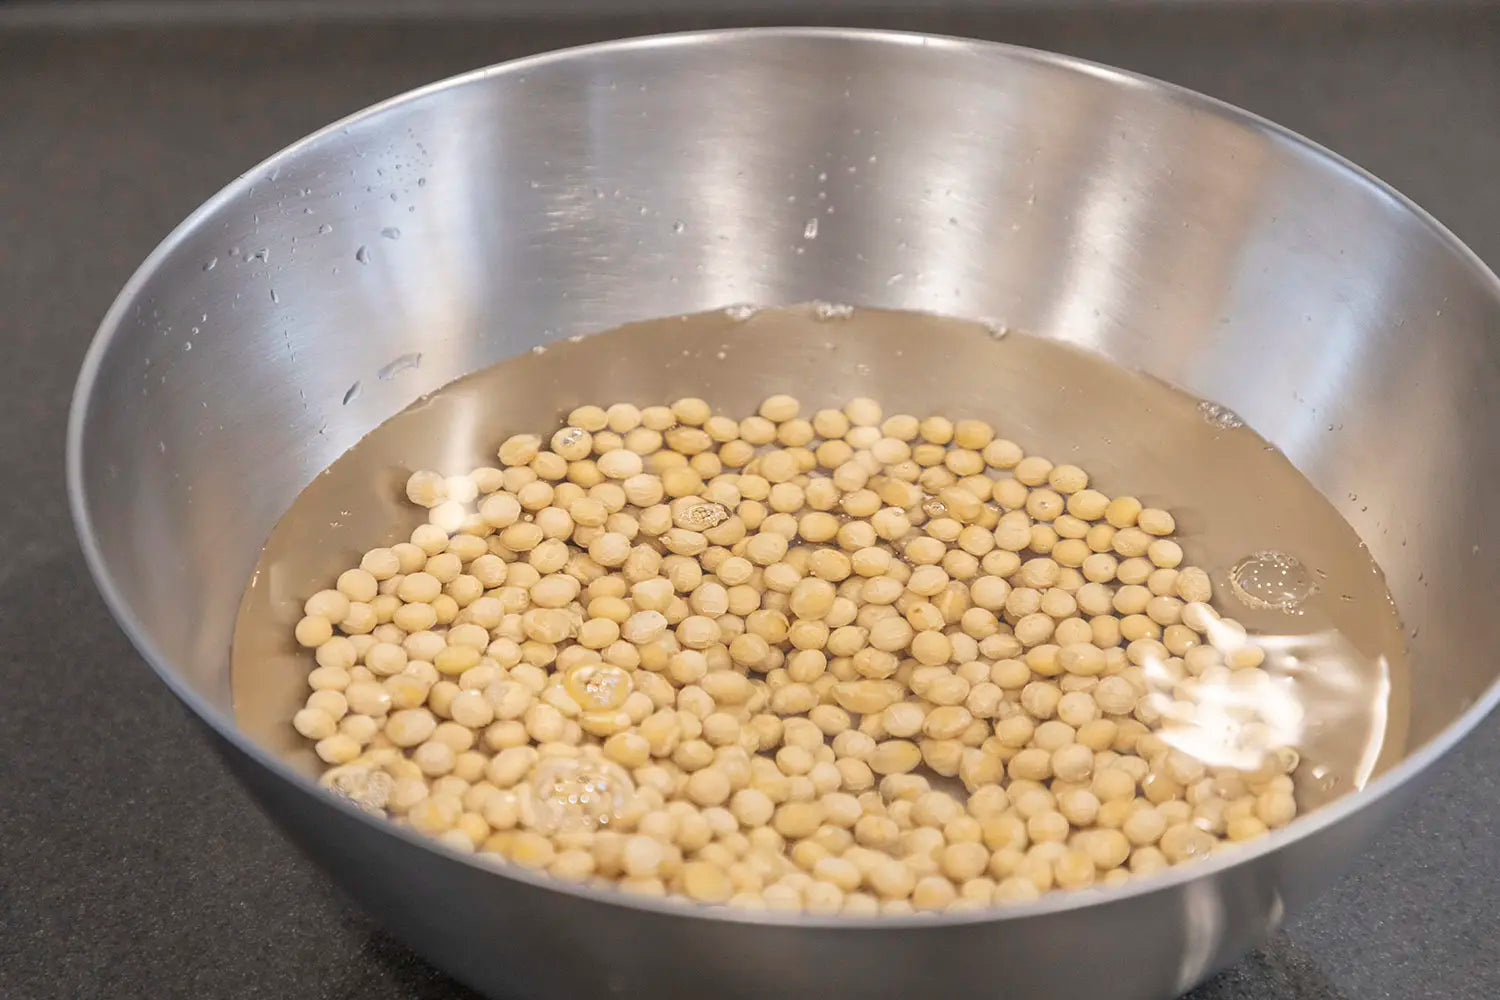 Soaking soybeans in water